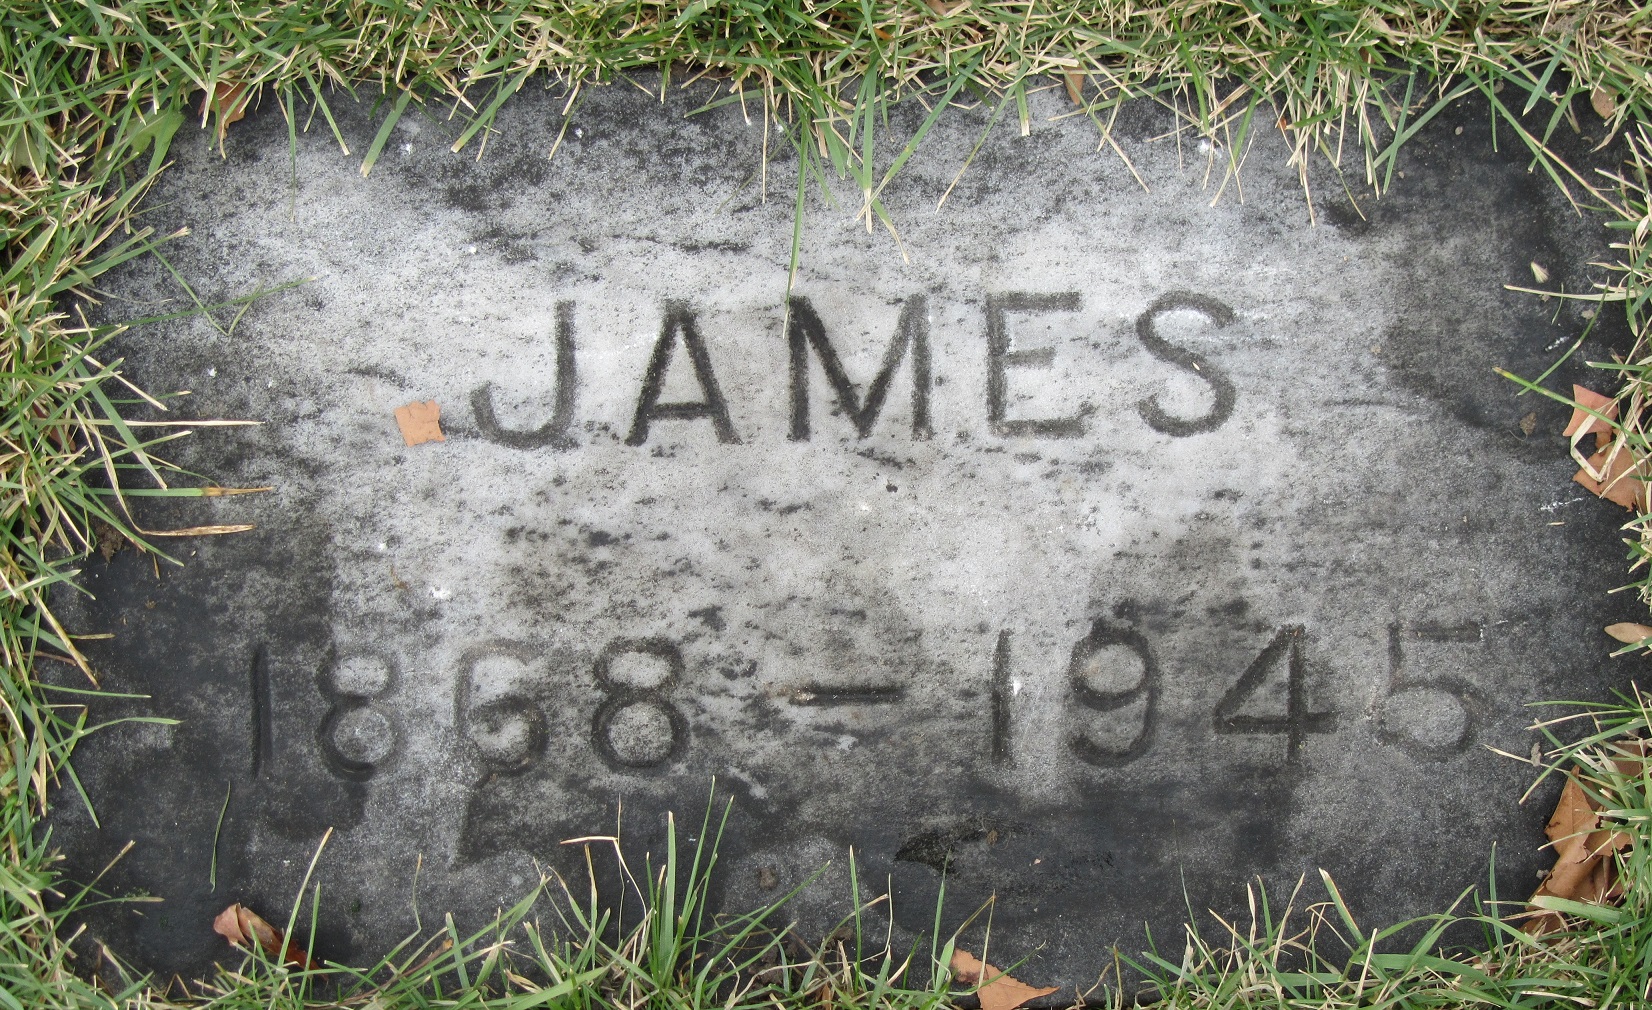 James Evans 1868-1945